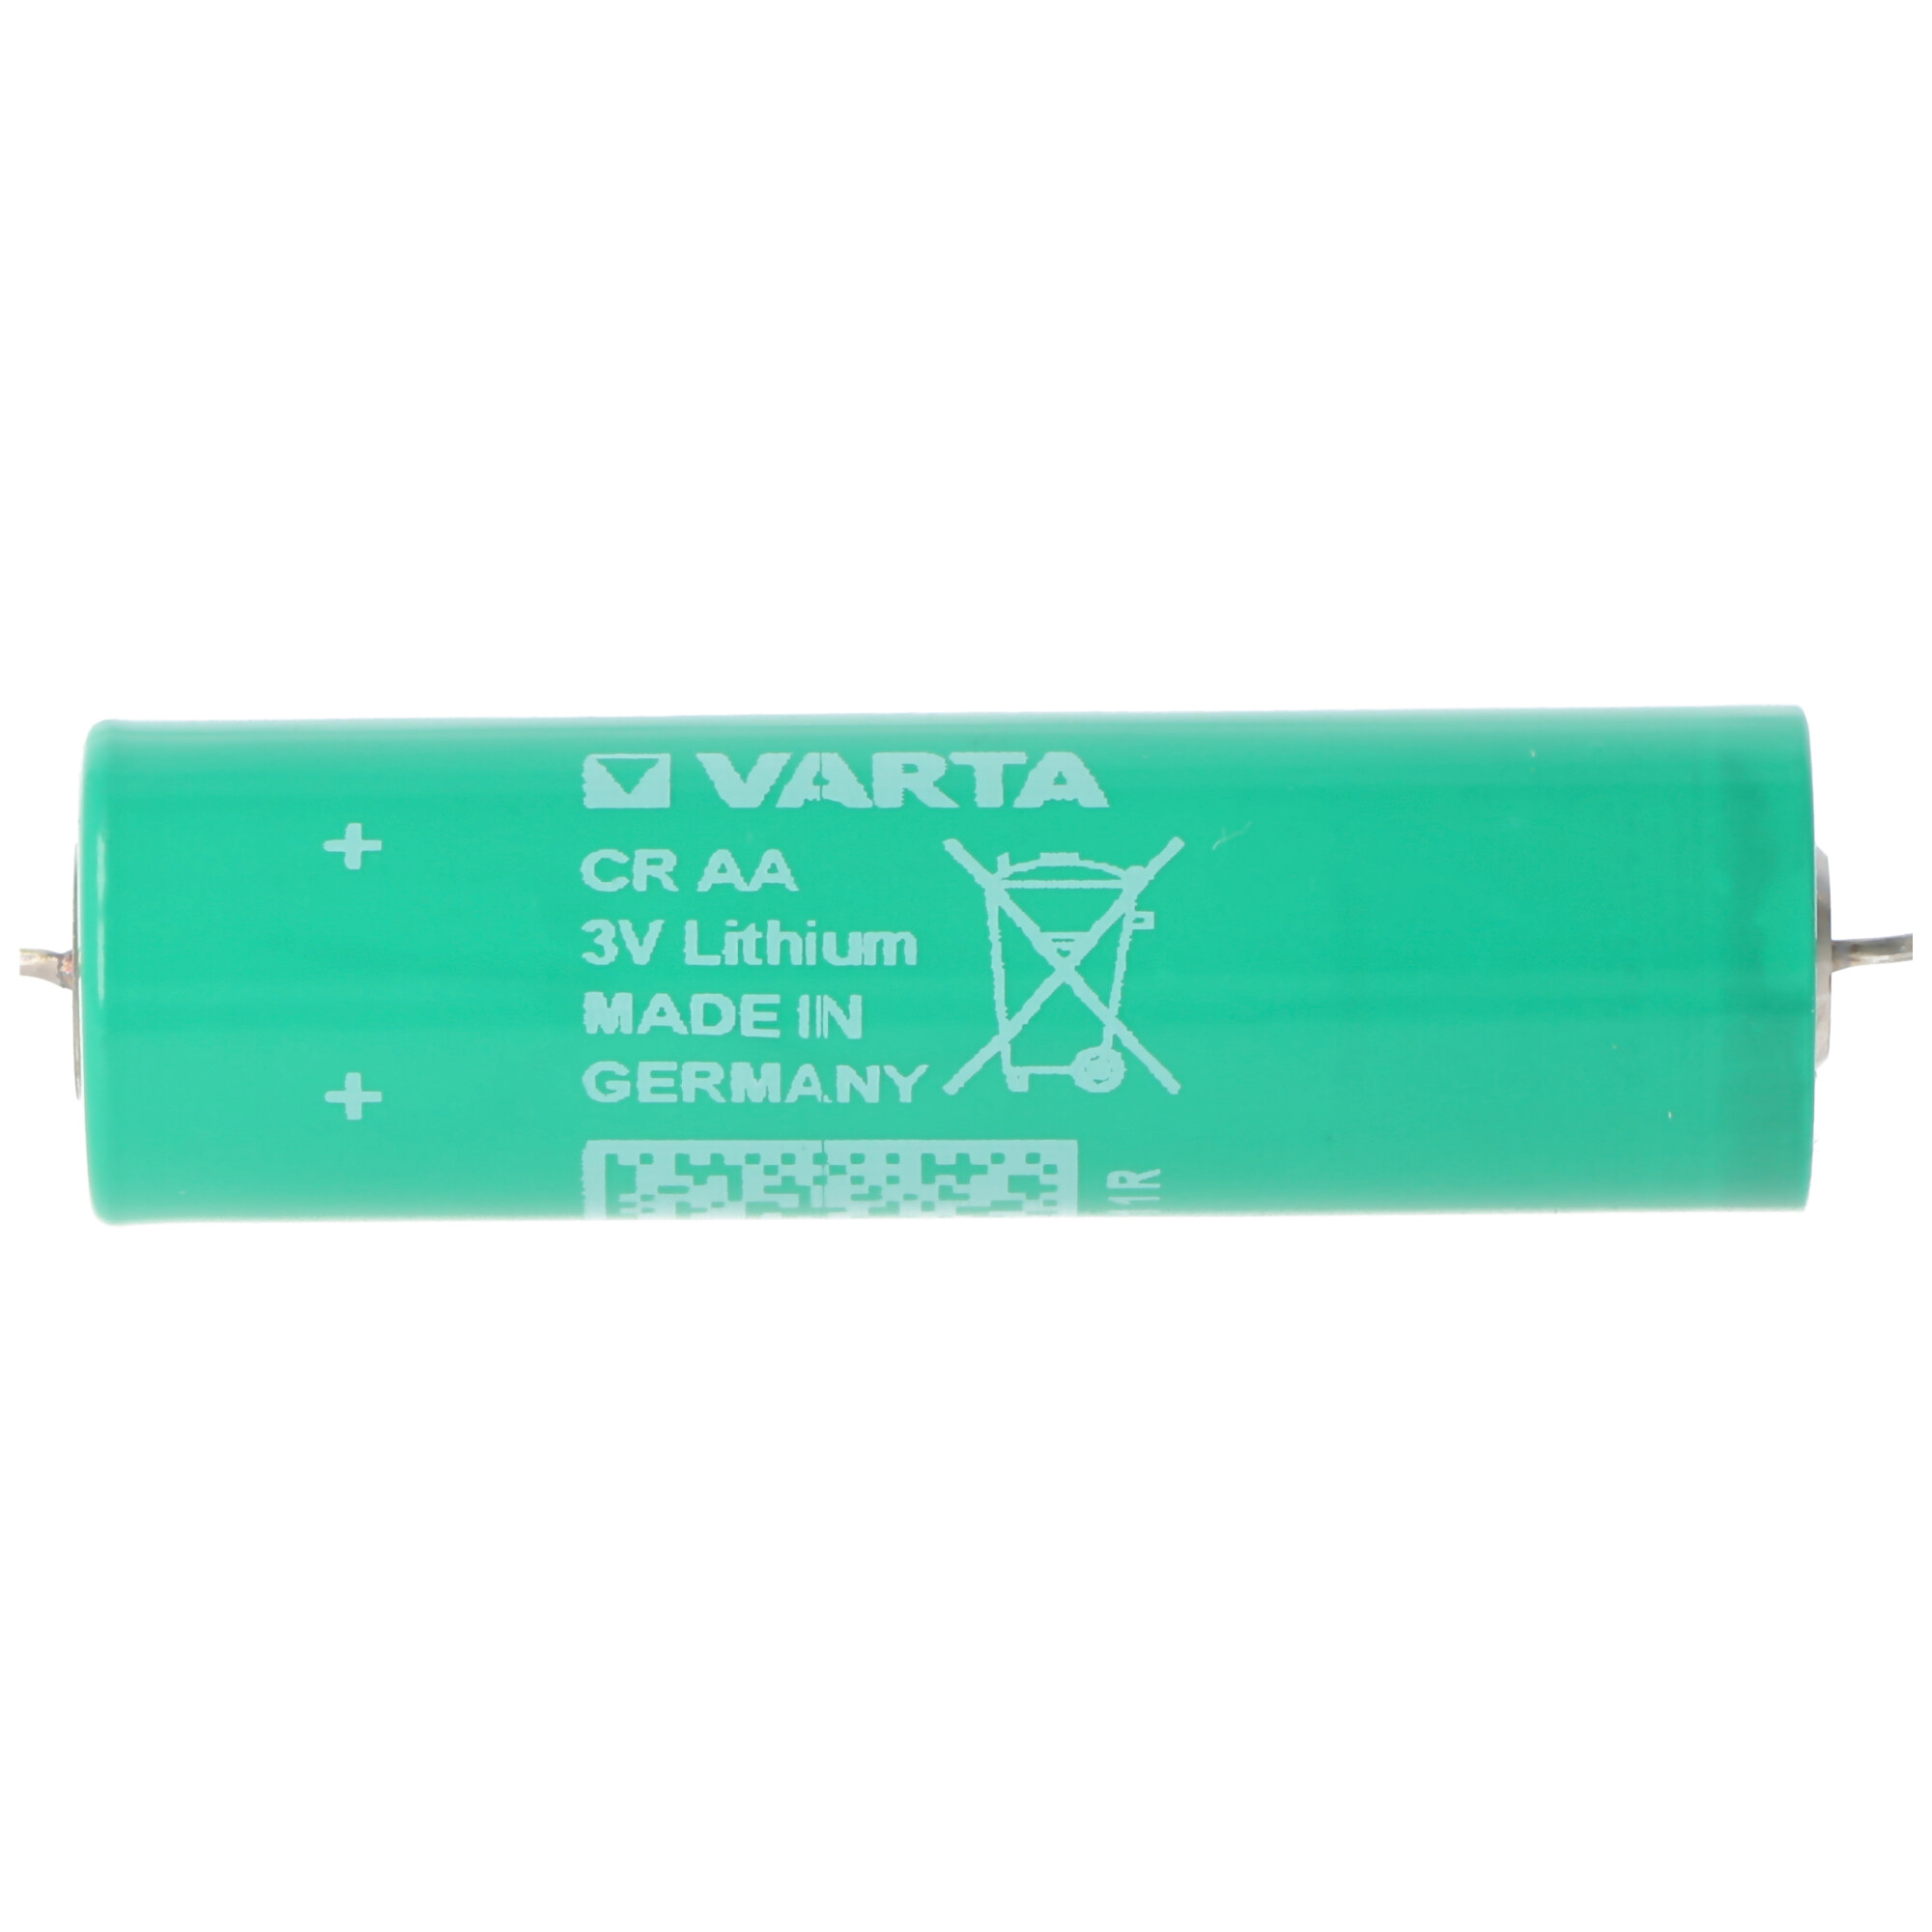 Varta CR AA Lithium Batterie 6117, UL MH 13654 N, Axial Draht